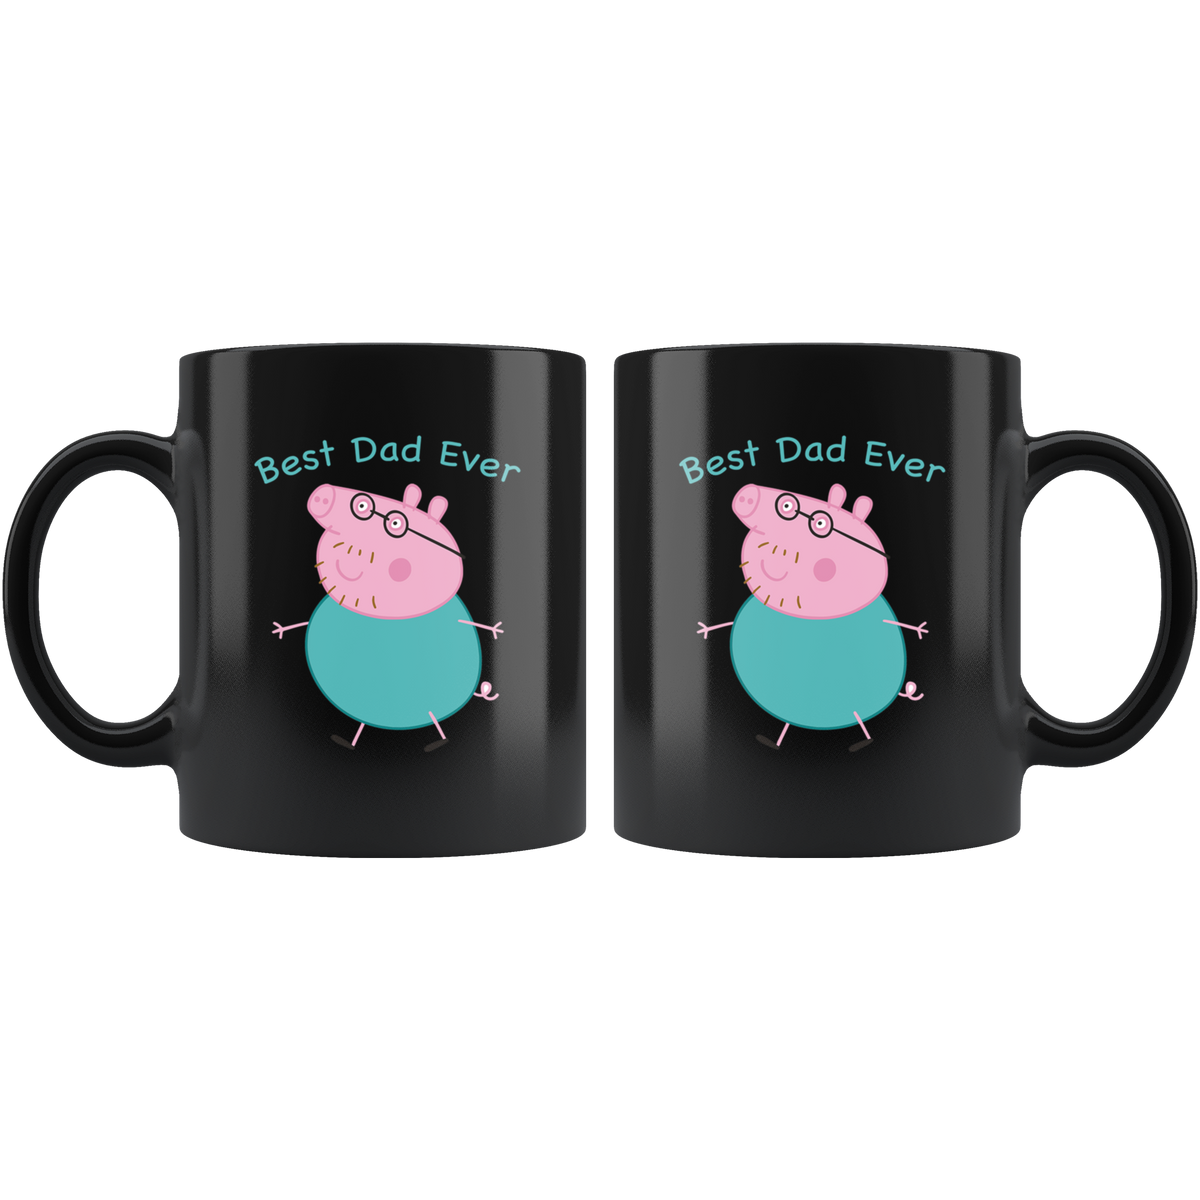 Peppa Pig Cups